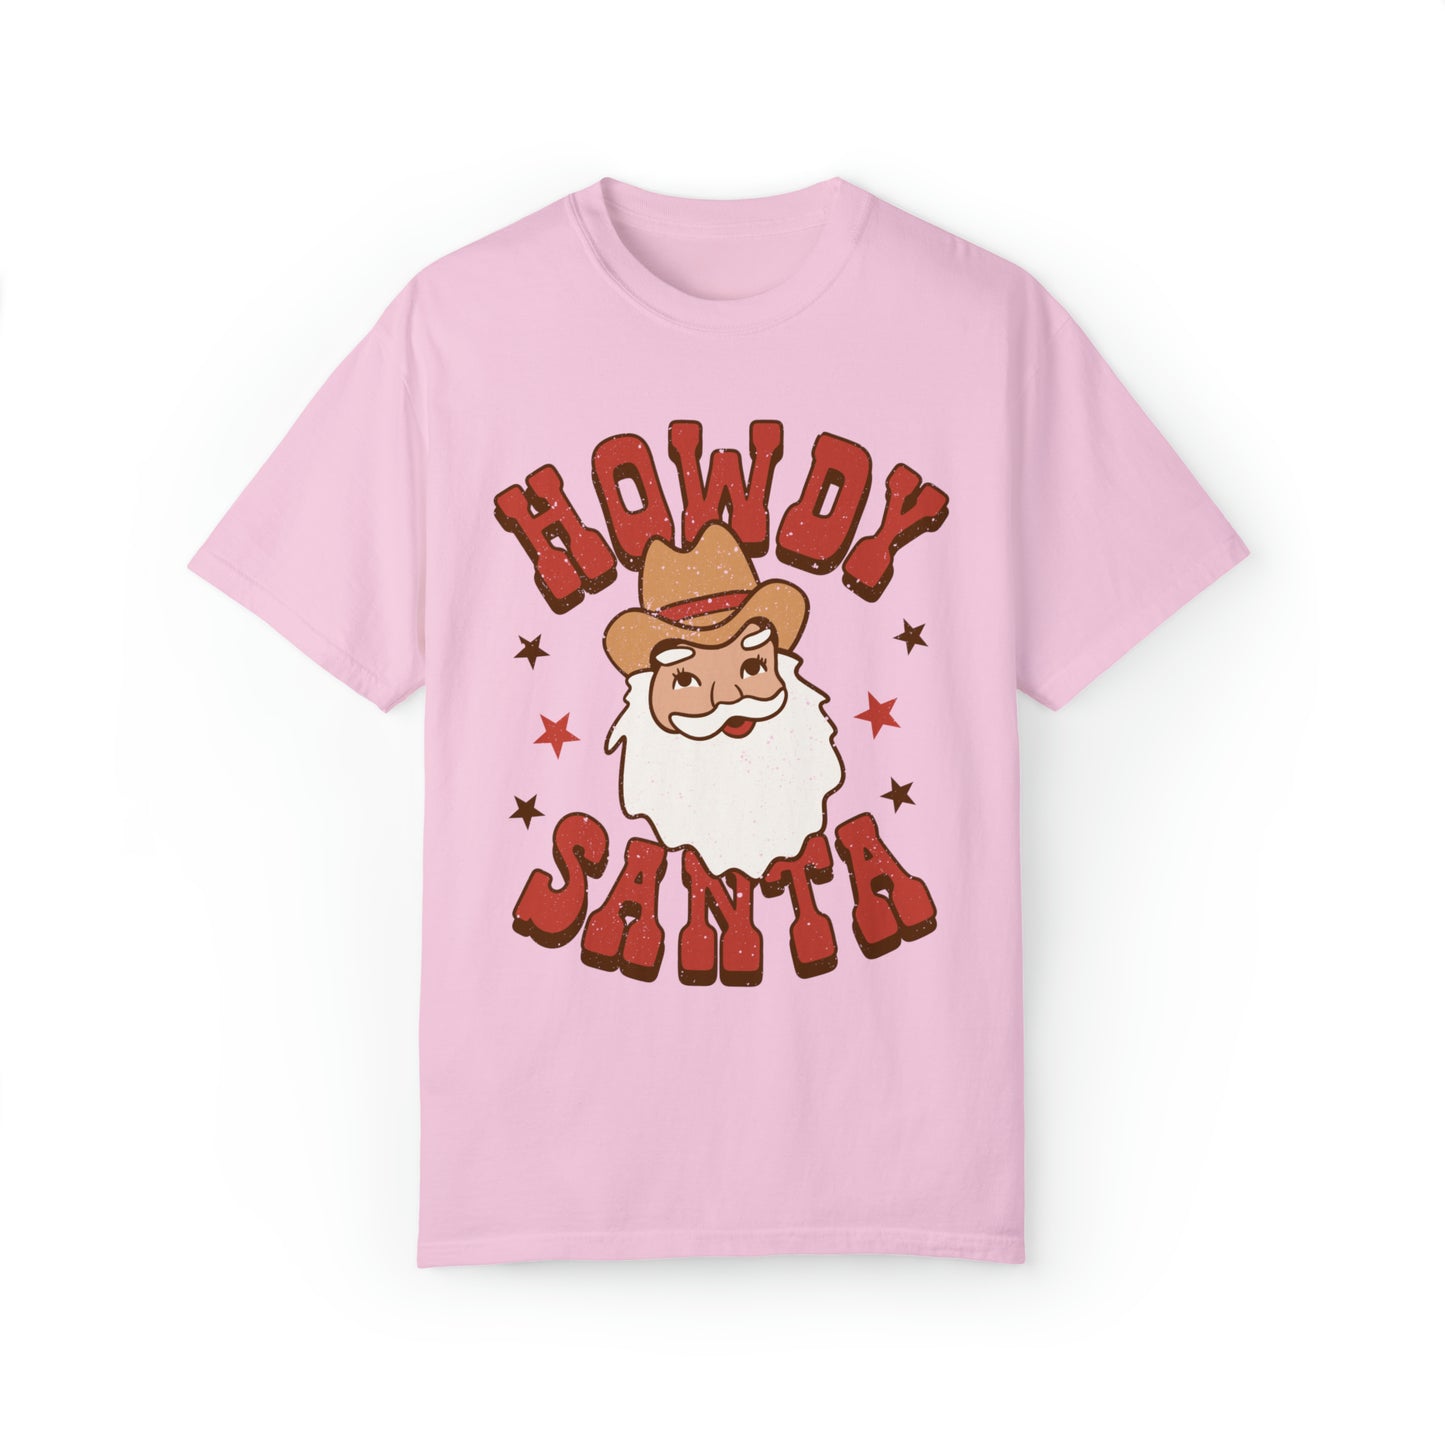 Retro Howdy Santa Shirt